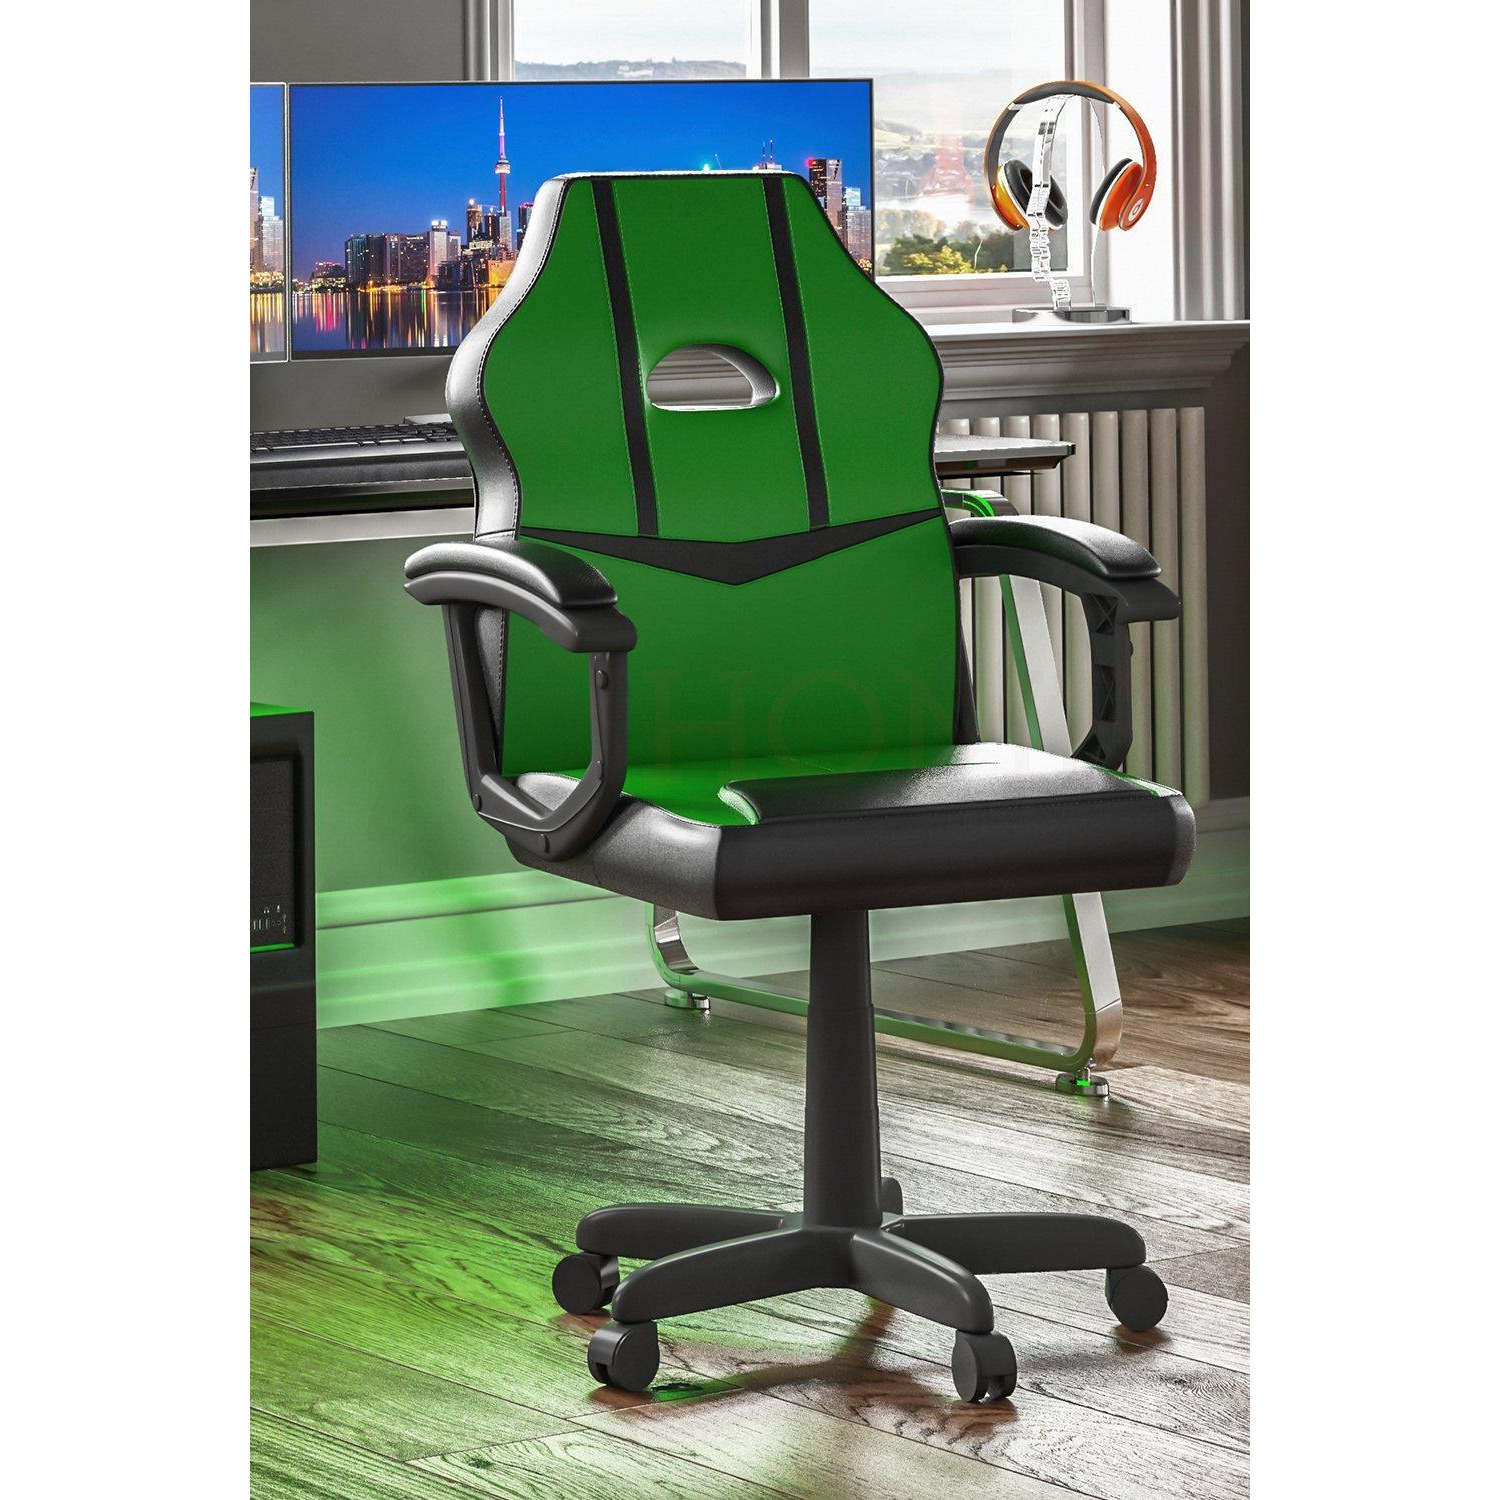 Vida Designs Comet Racing Gaming Chair Office Adjustable Chair - image 1